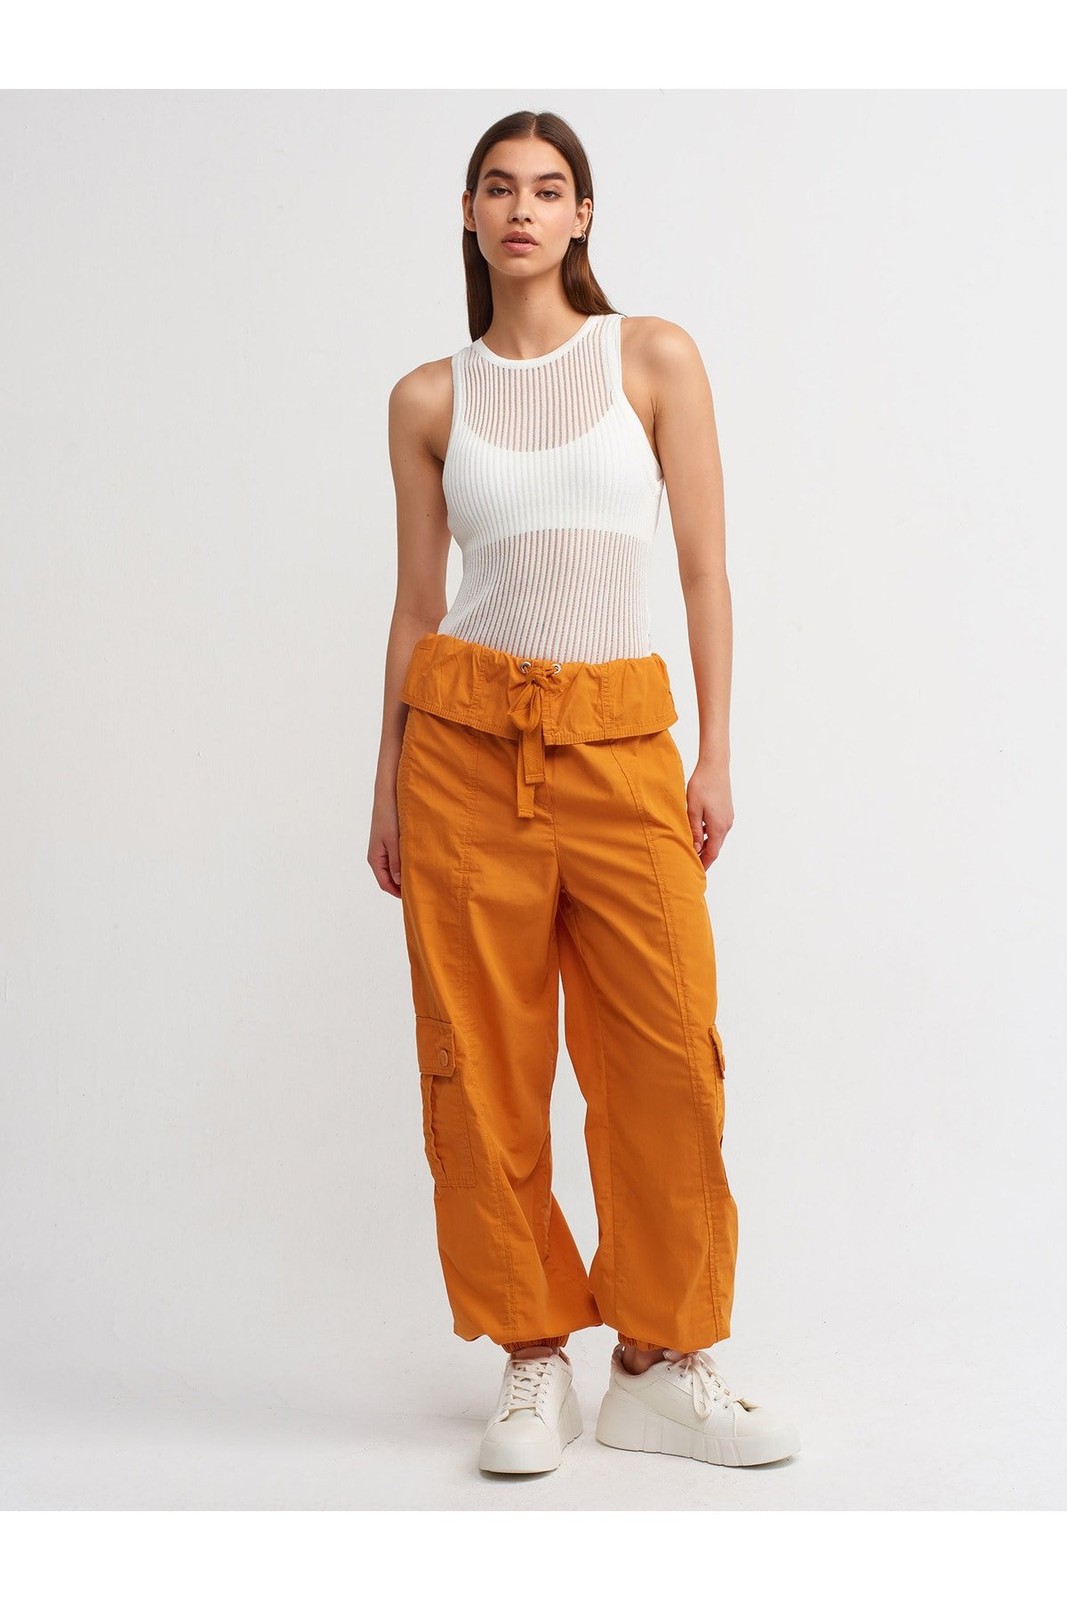 Dilvin 70928 Waist Fold Cargo Pants-Orange